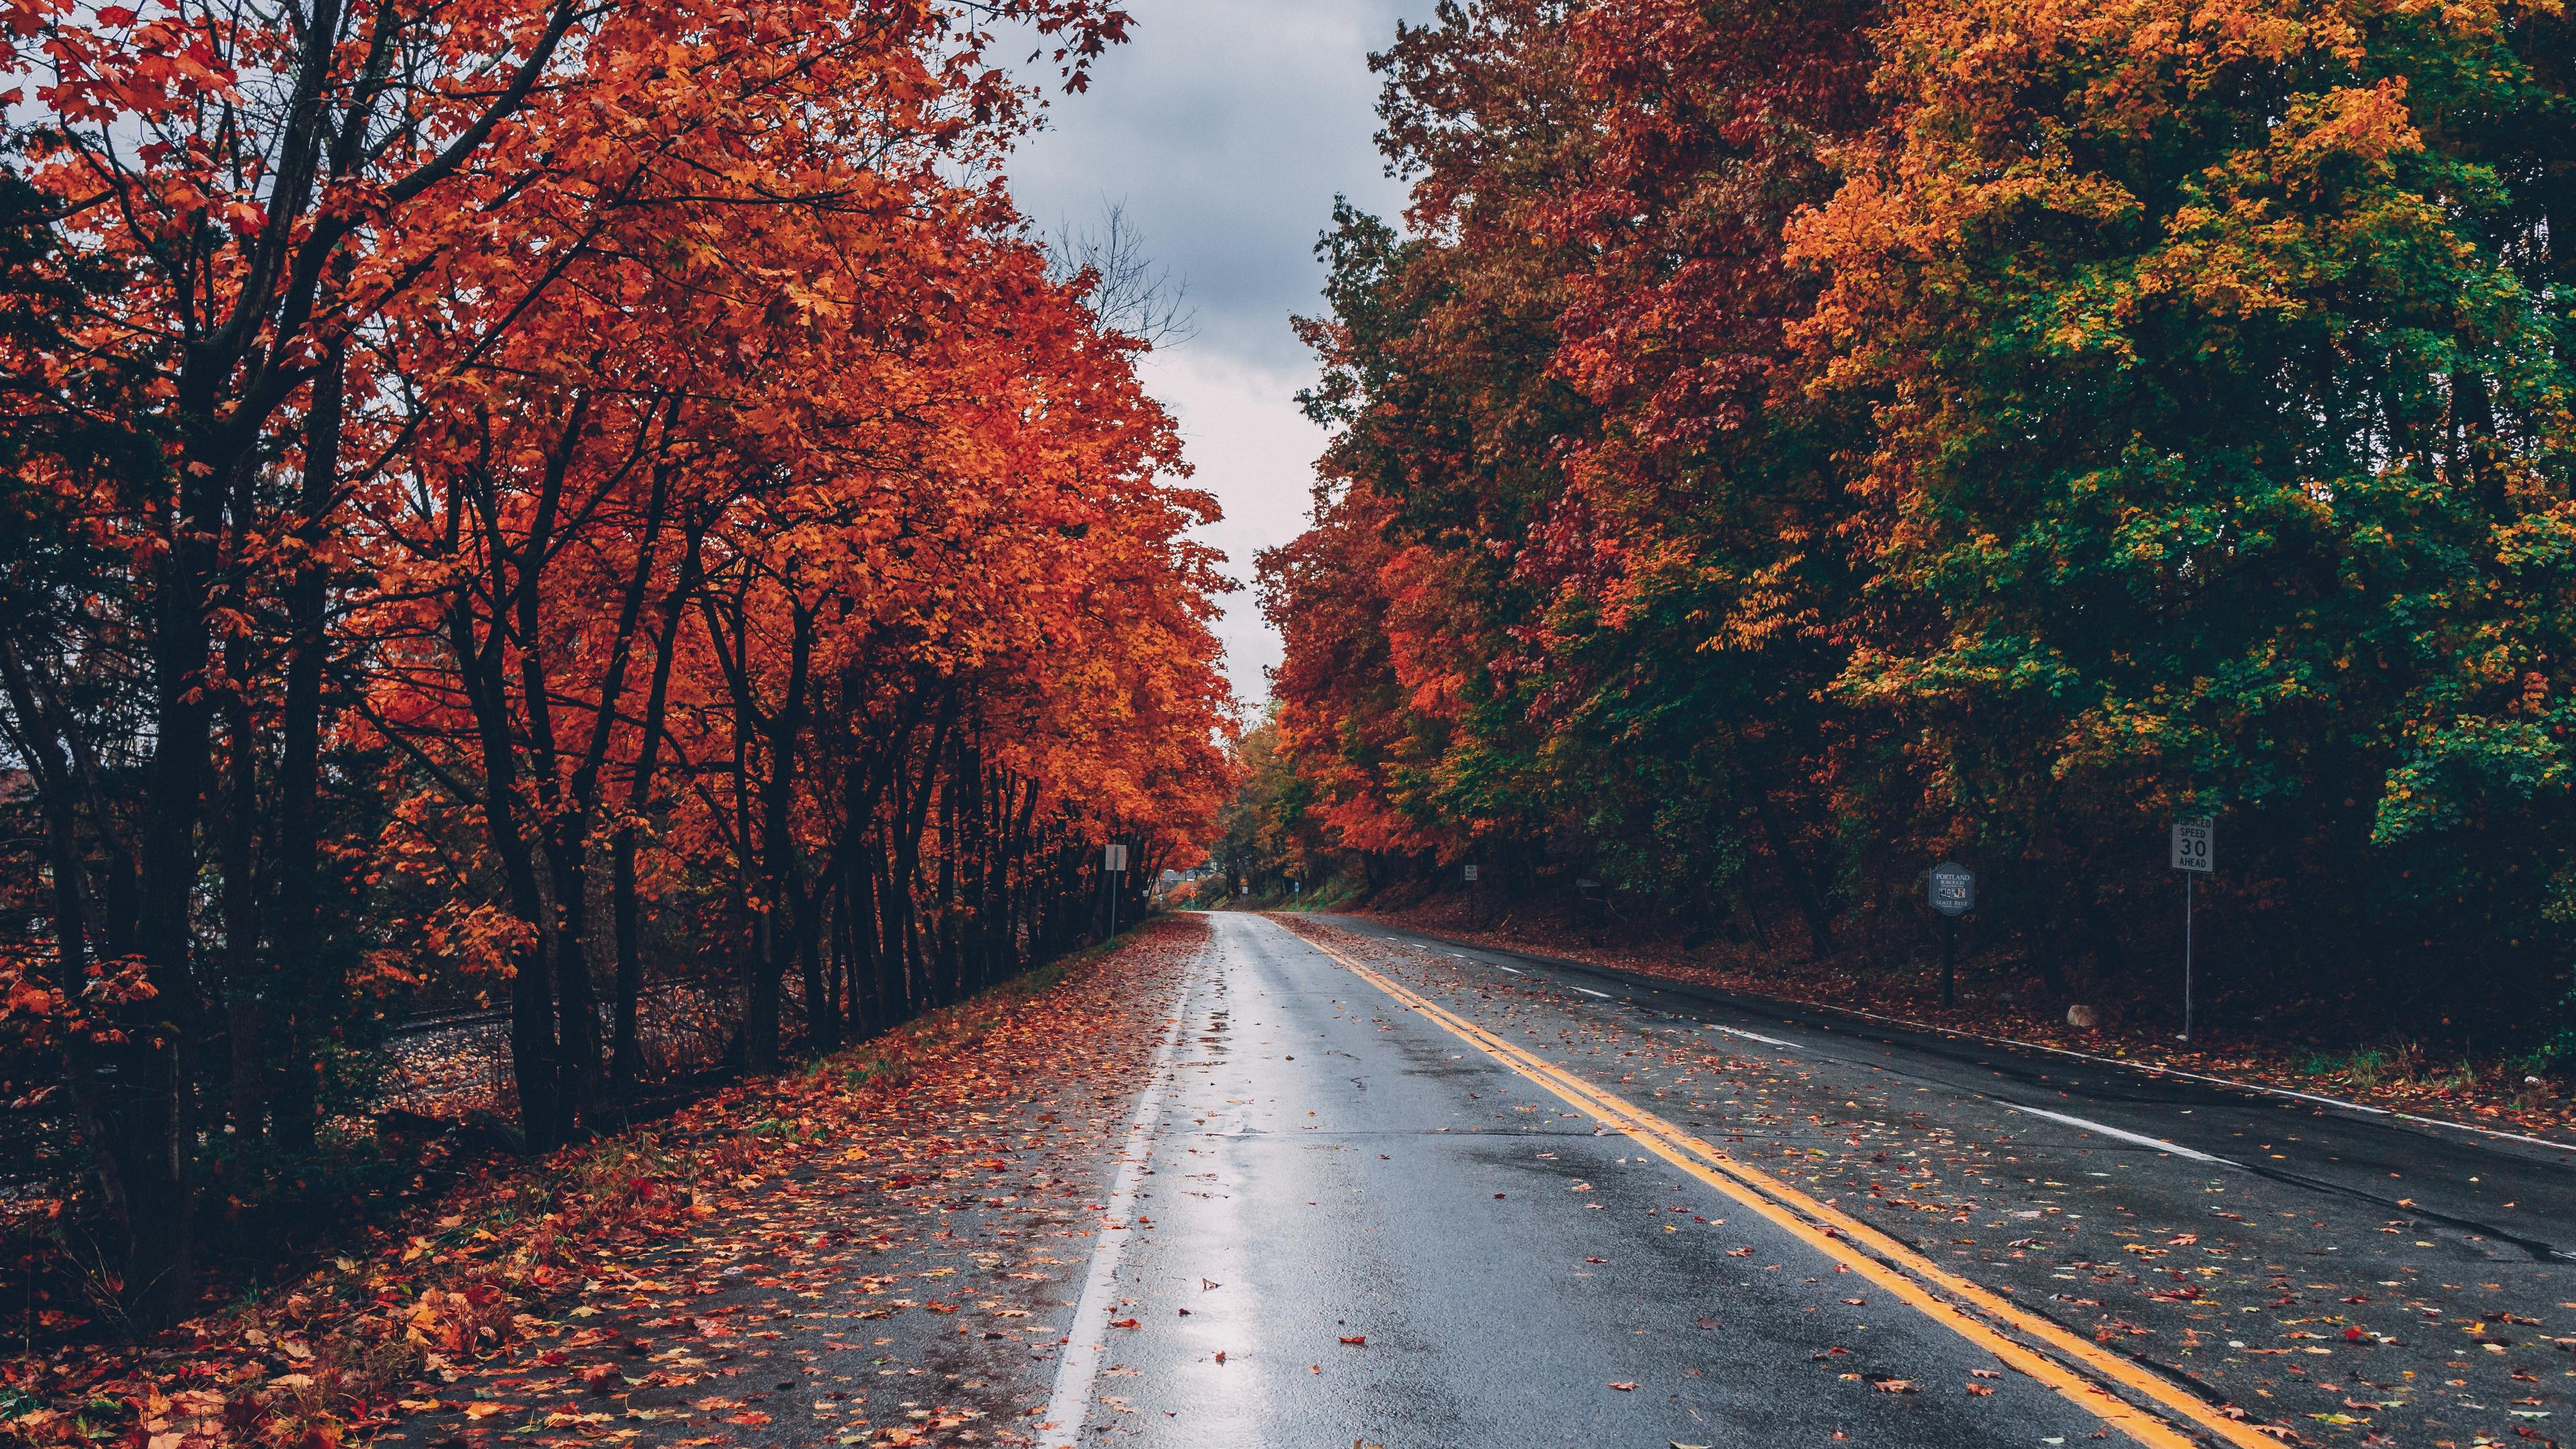 Autumn Road Trees On Sides Fallen Leaves Wallpaper 4k